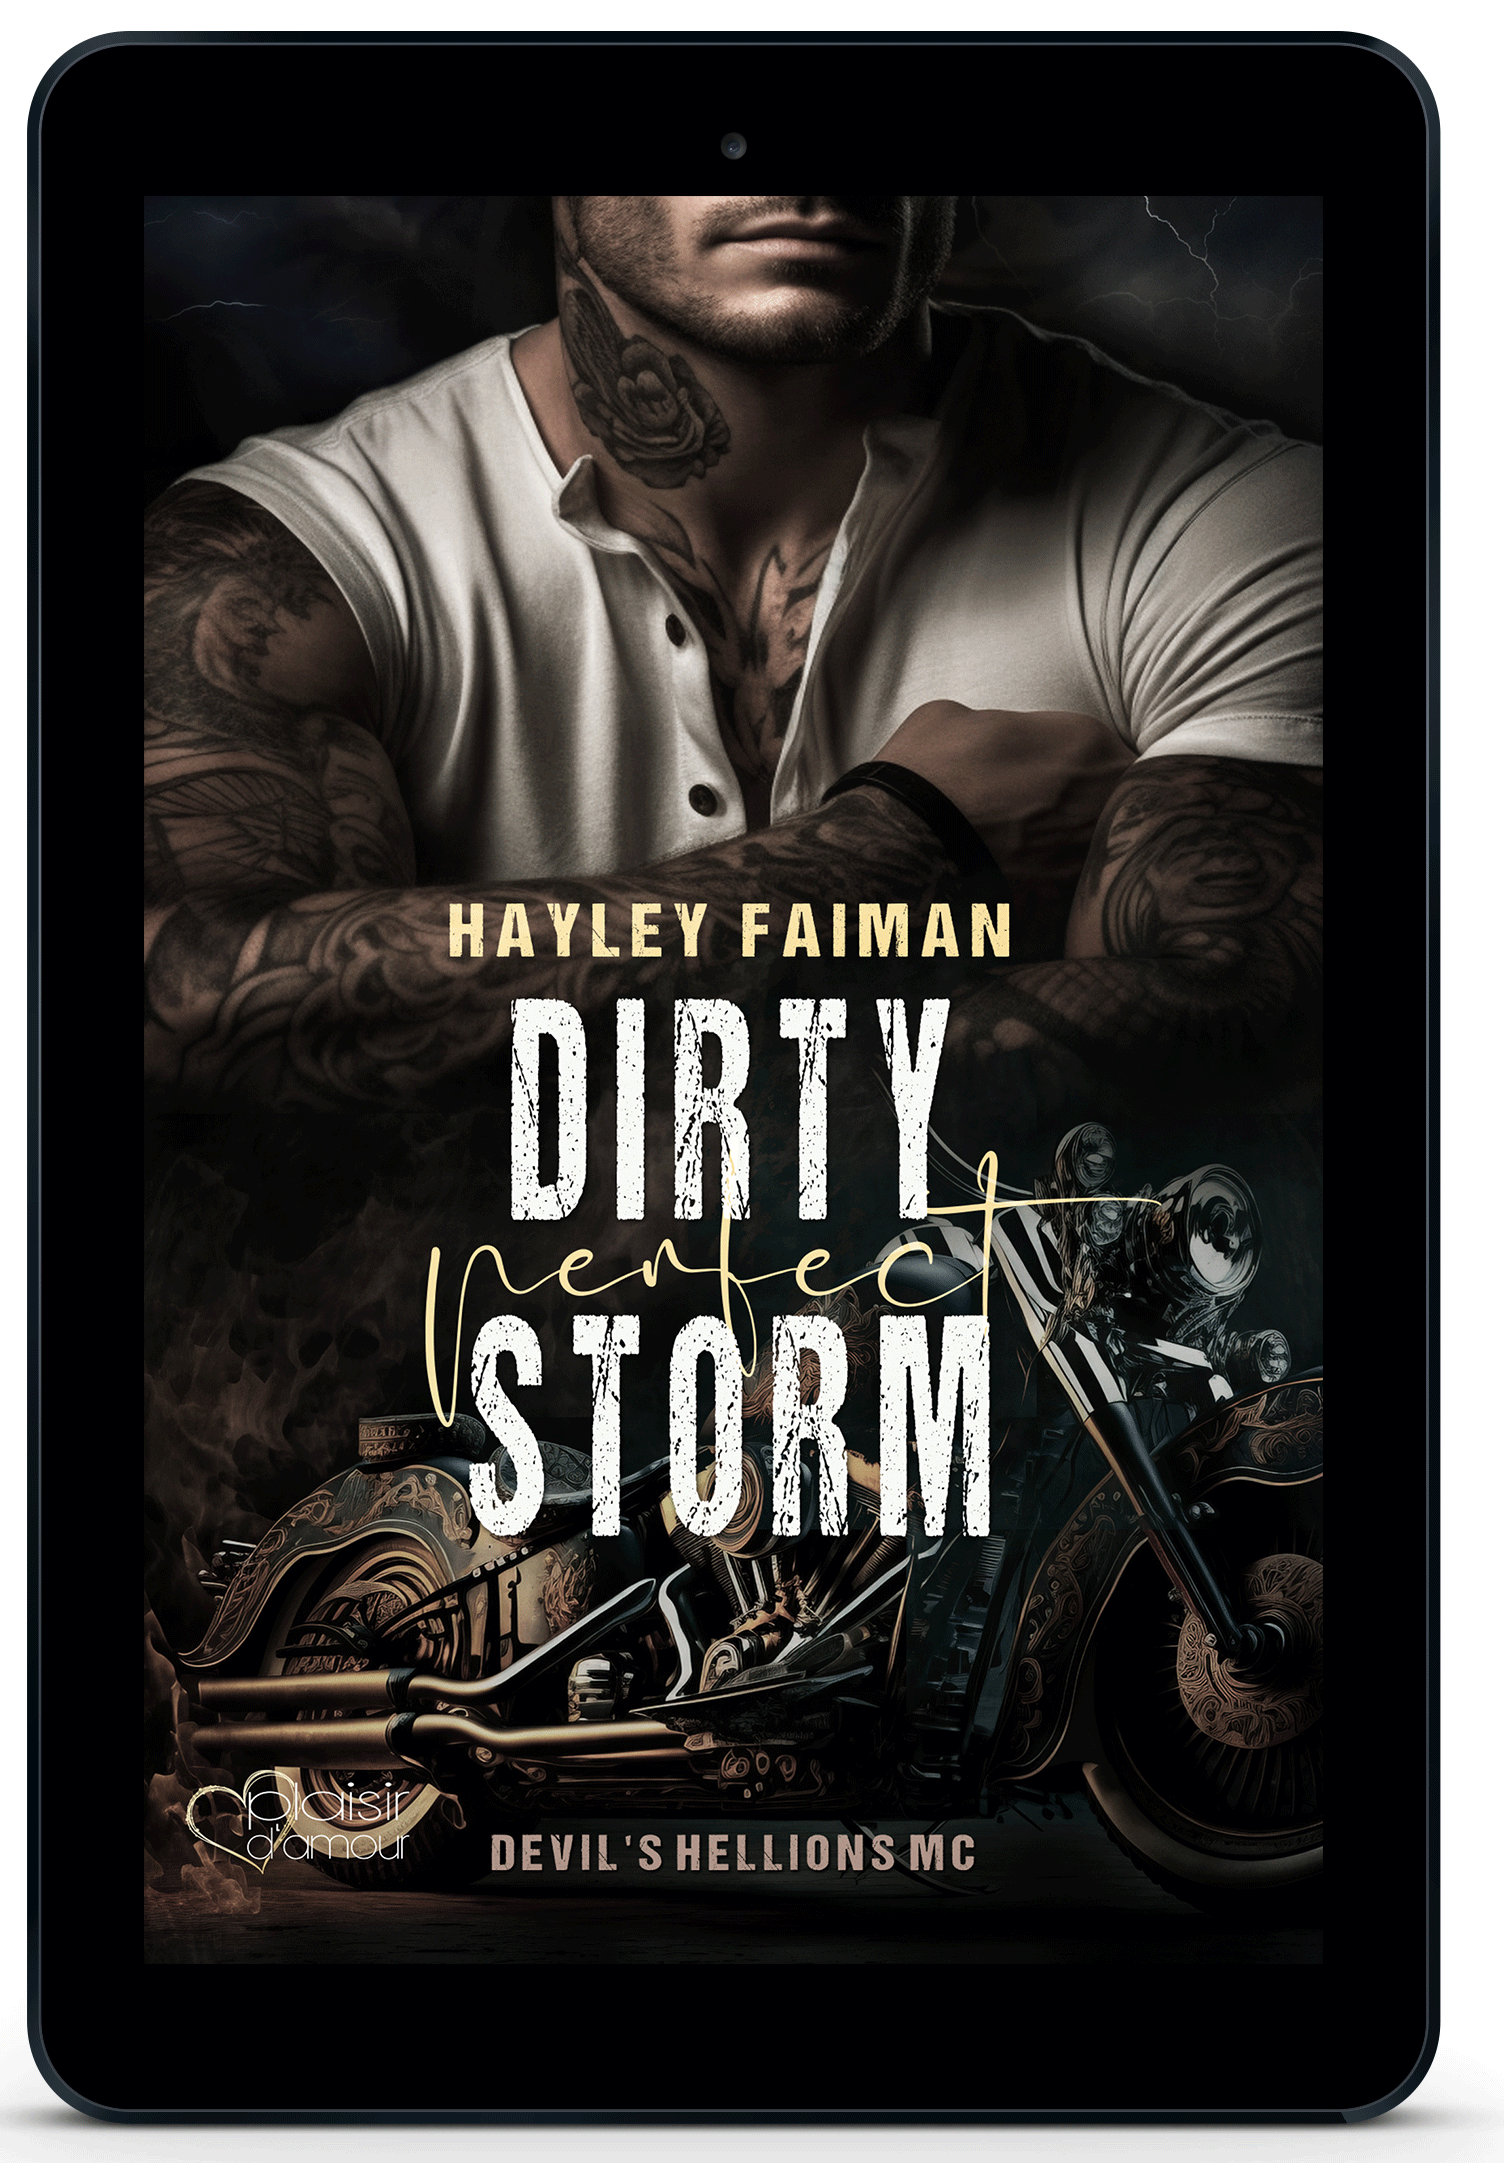 Buchcover von:  Dirty Perfect Storm